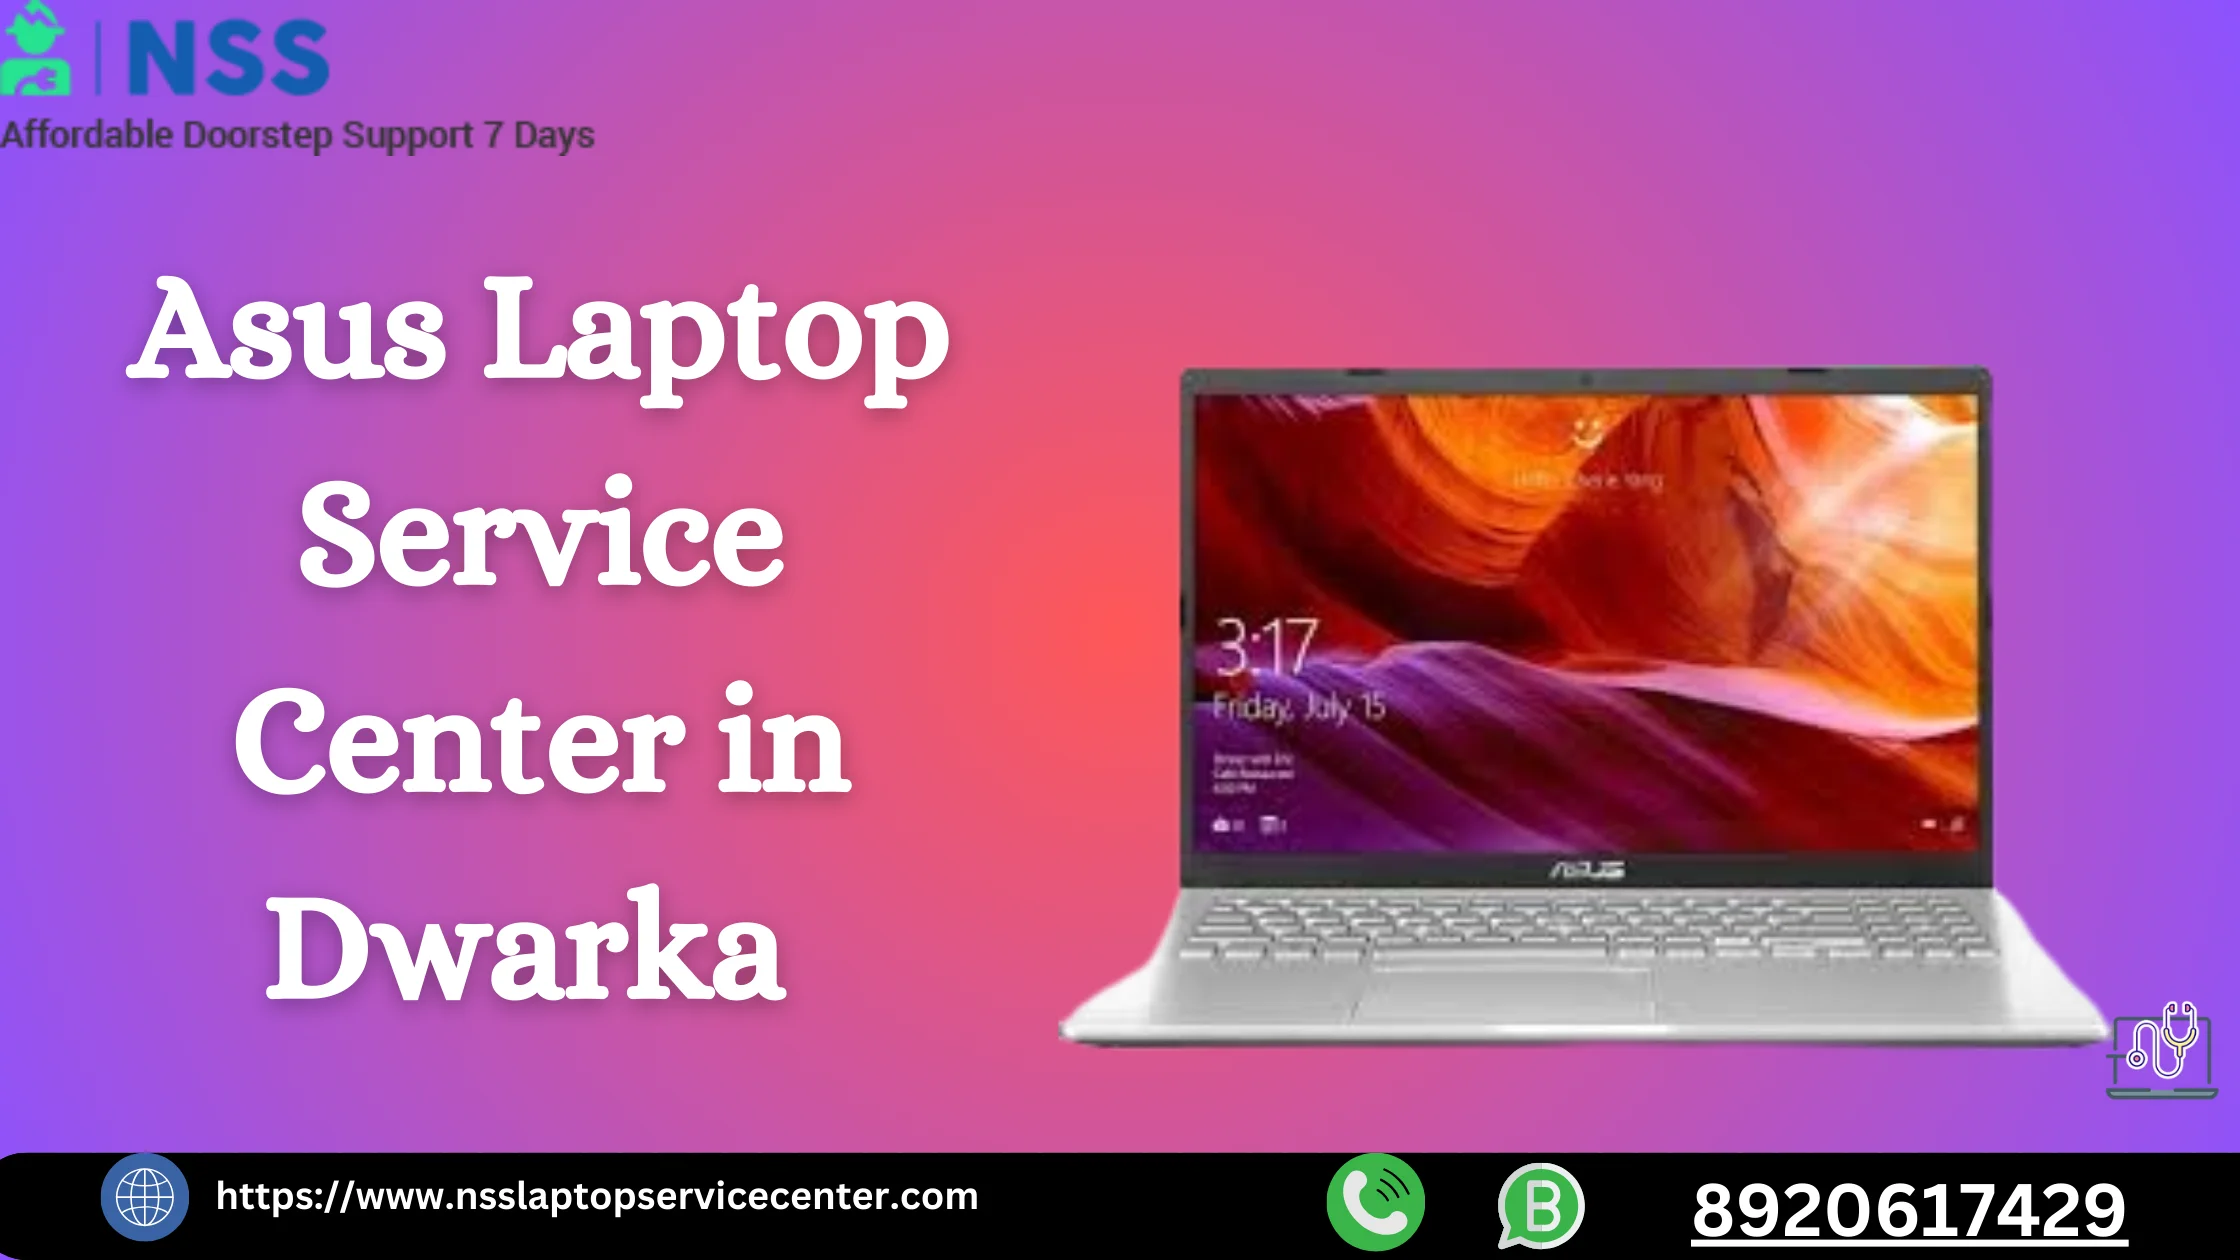 Asus Laptop Service Center in Dwarka Near Delhi